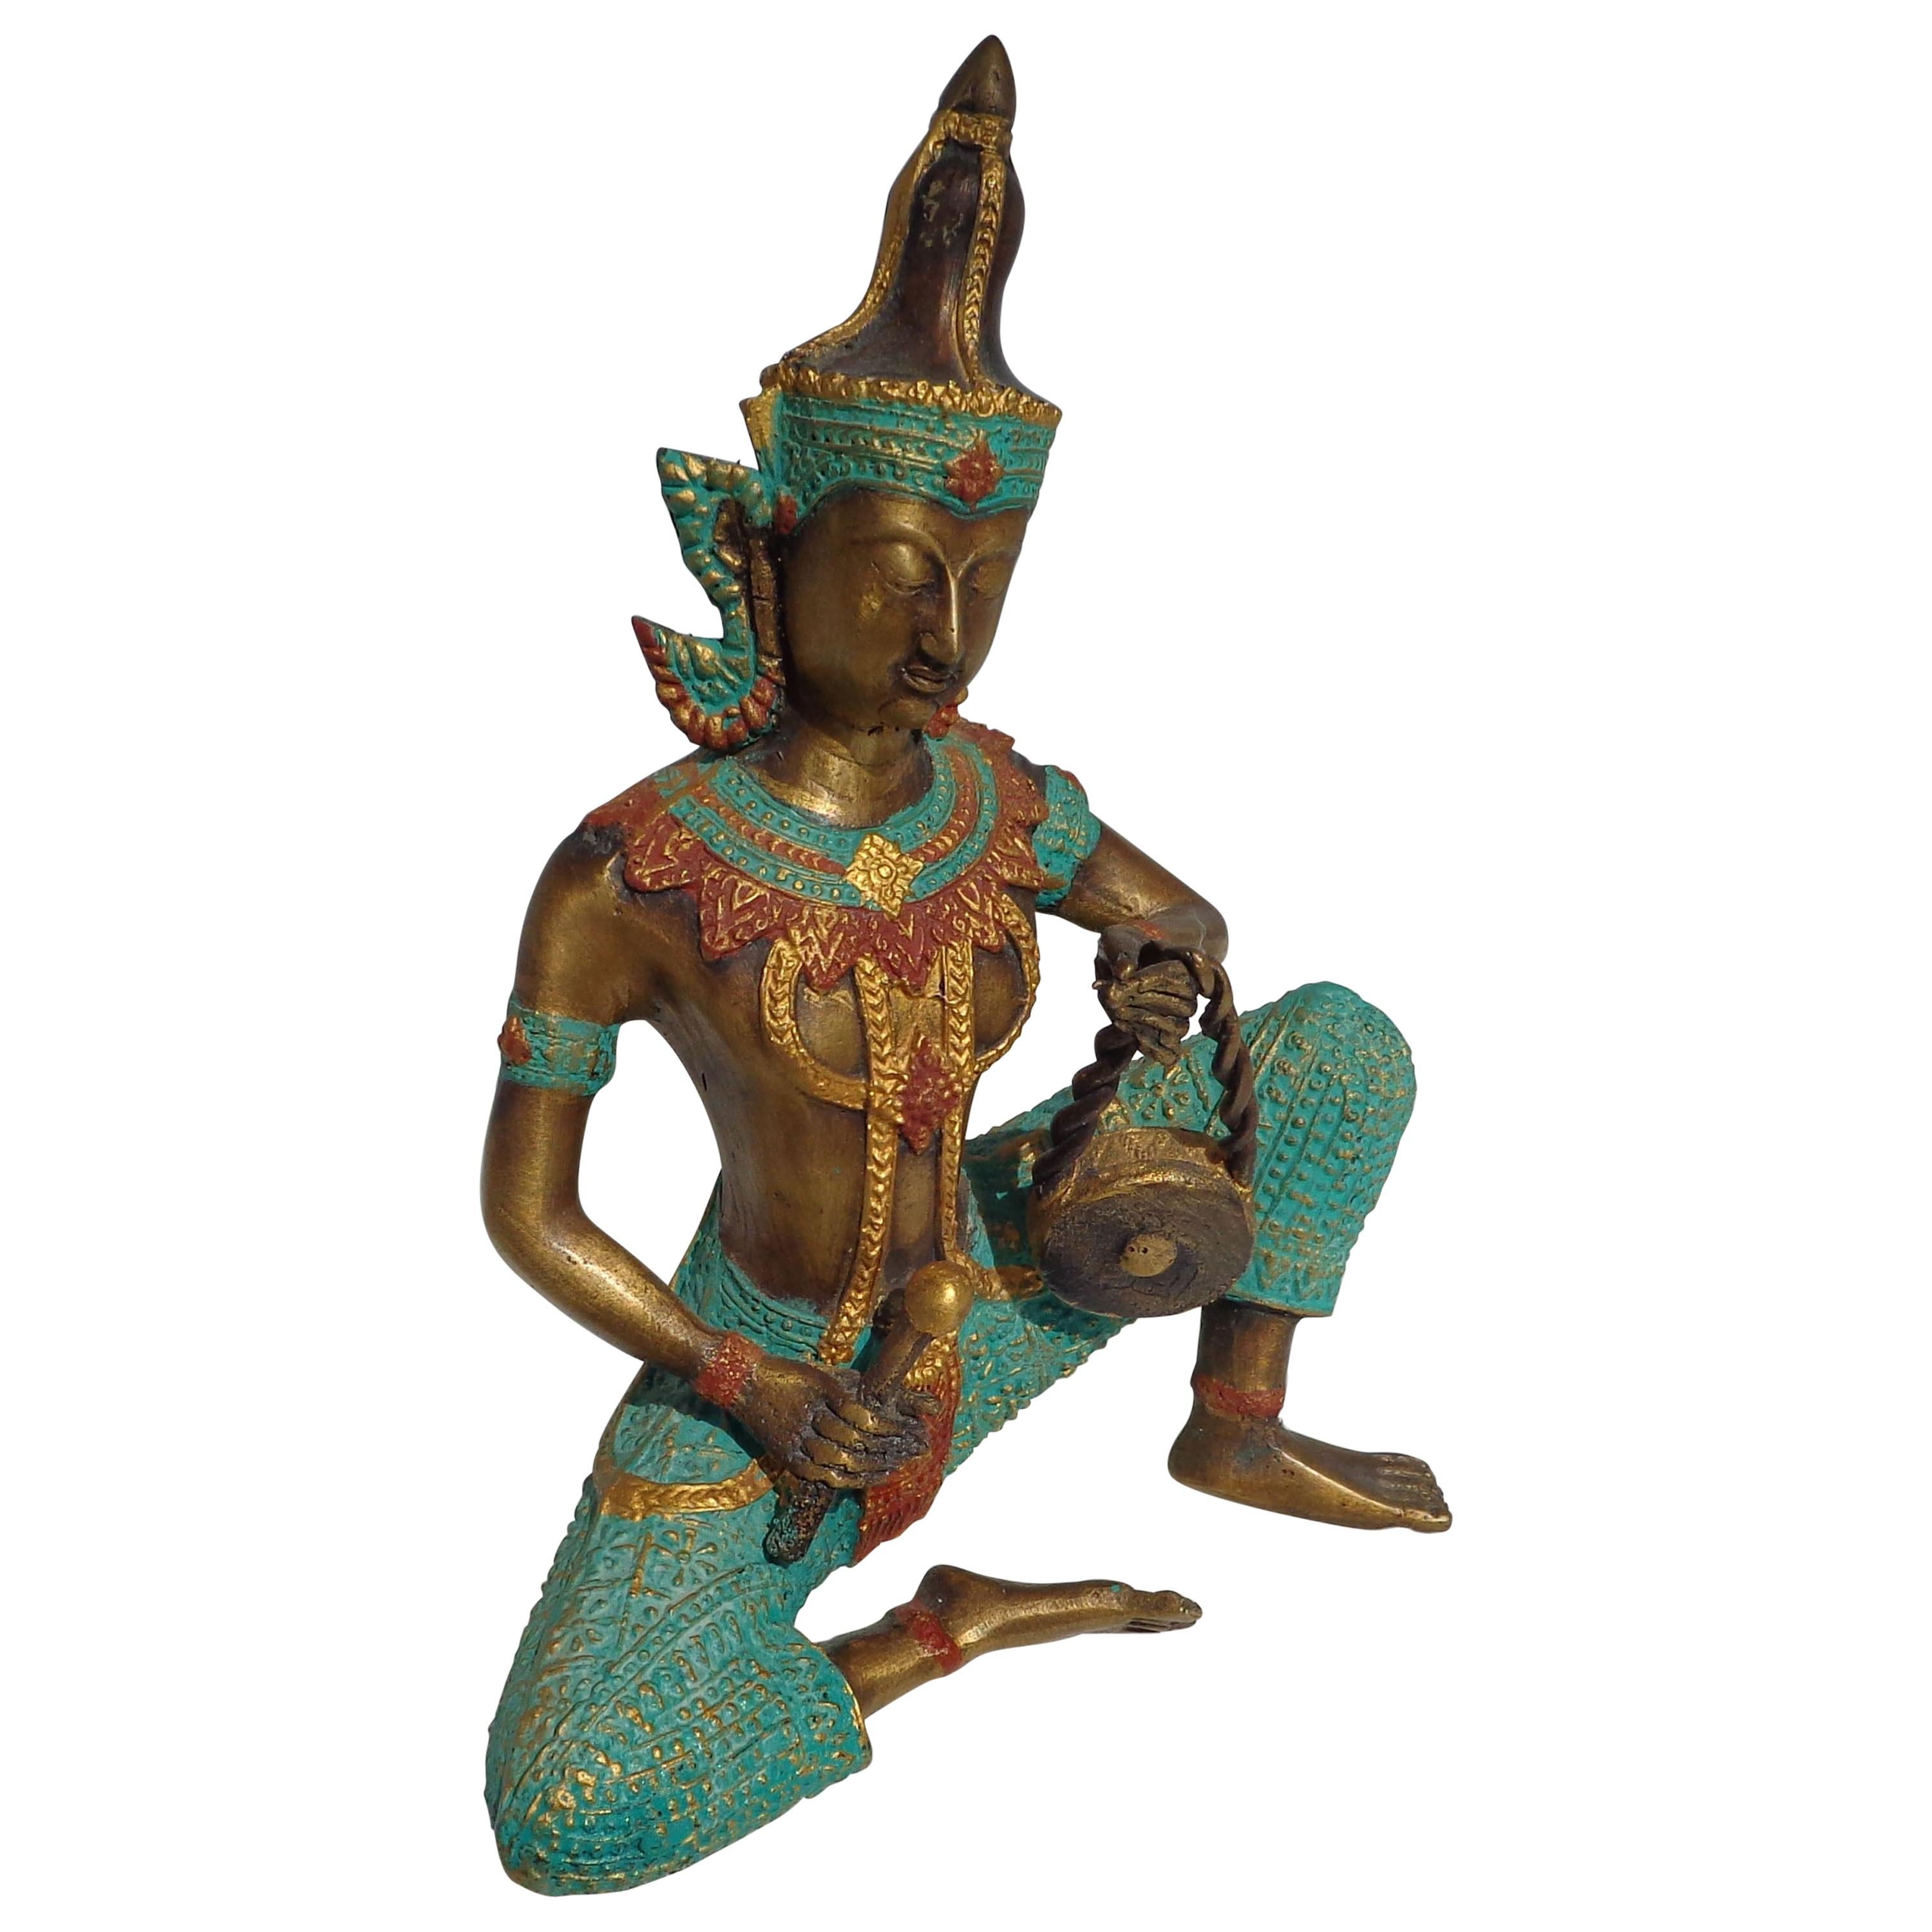 Bronze Thai Sculpture of Musician Playing Drum